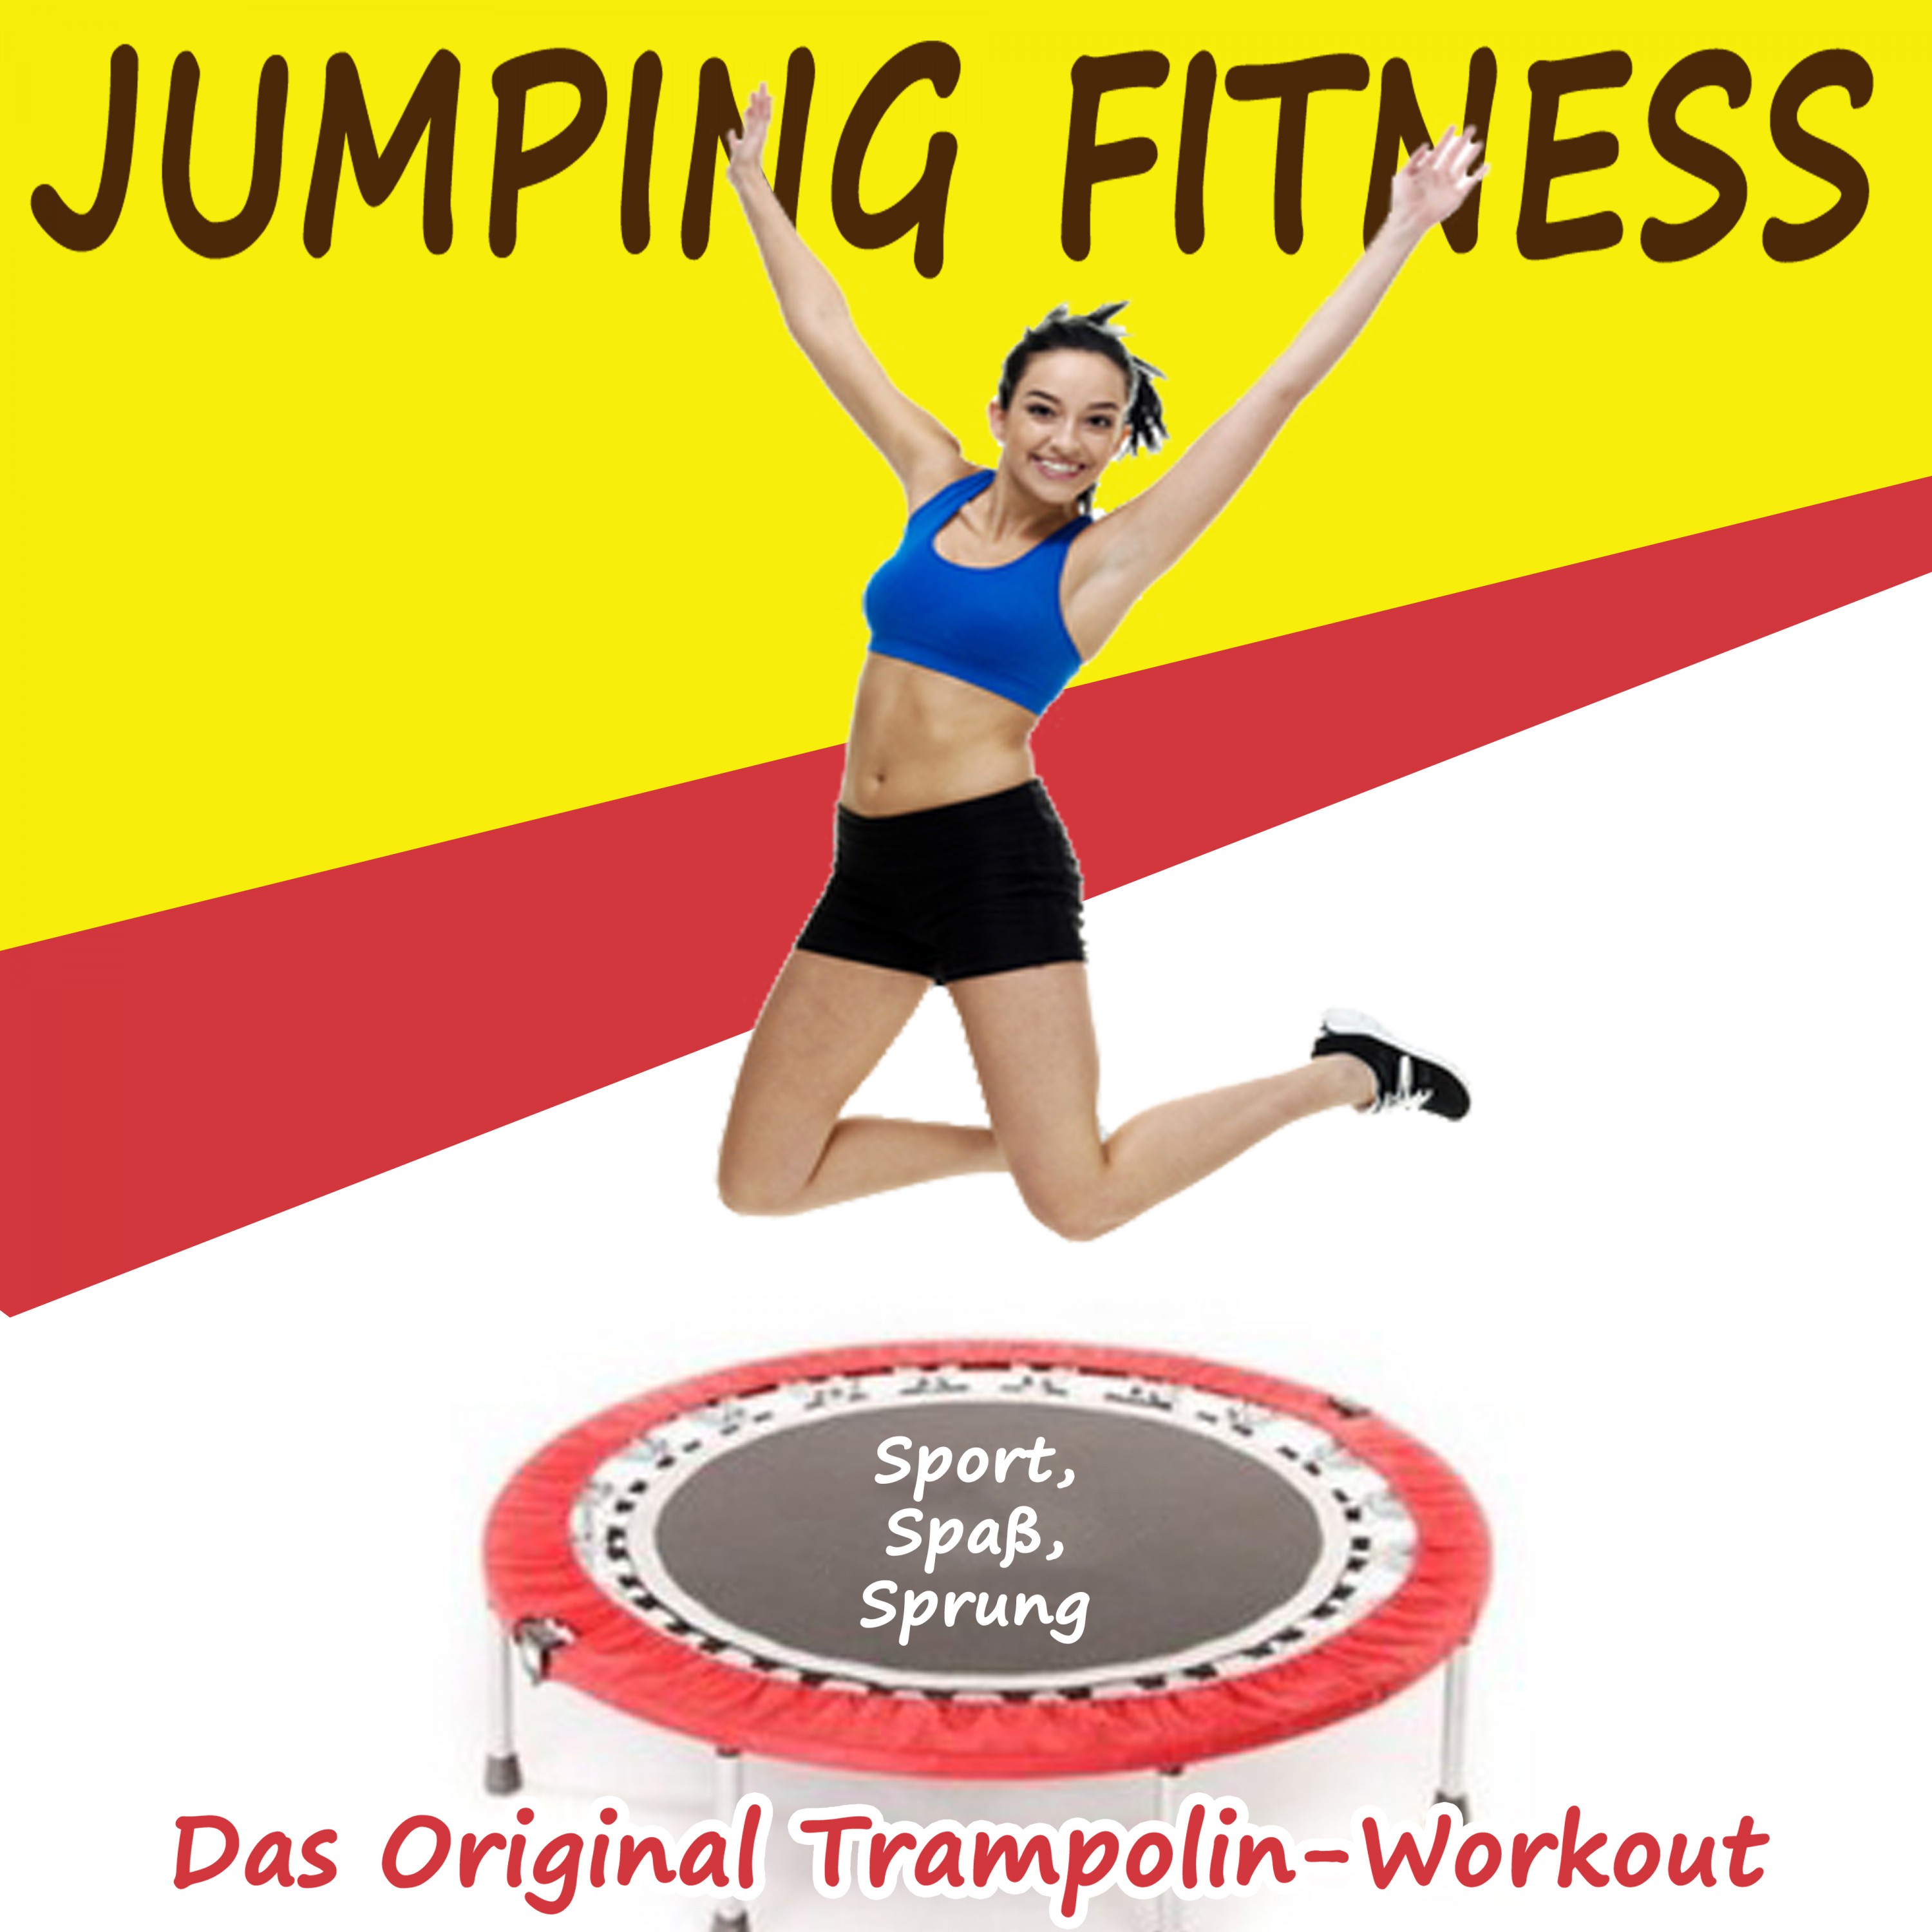 Jumping Fitness Sport, Spa, Sprung Komplette DJ Mix Inklusive Abkü hlen